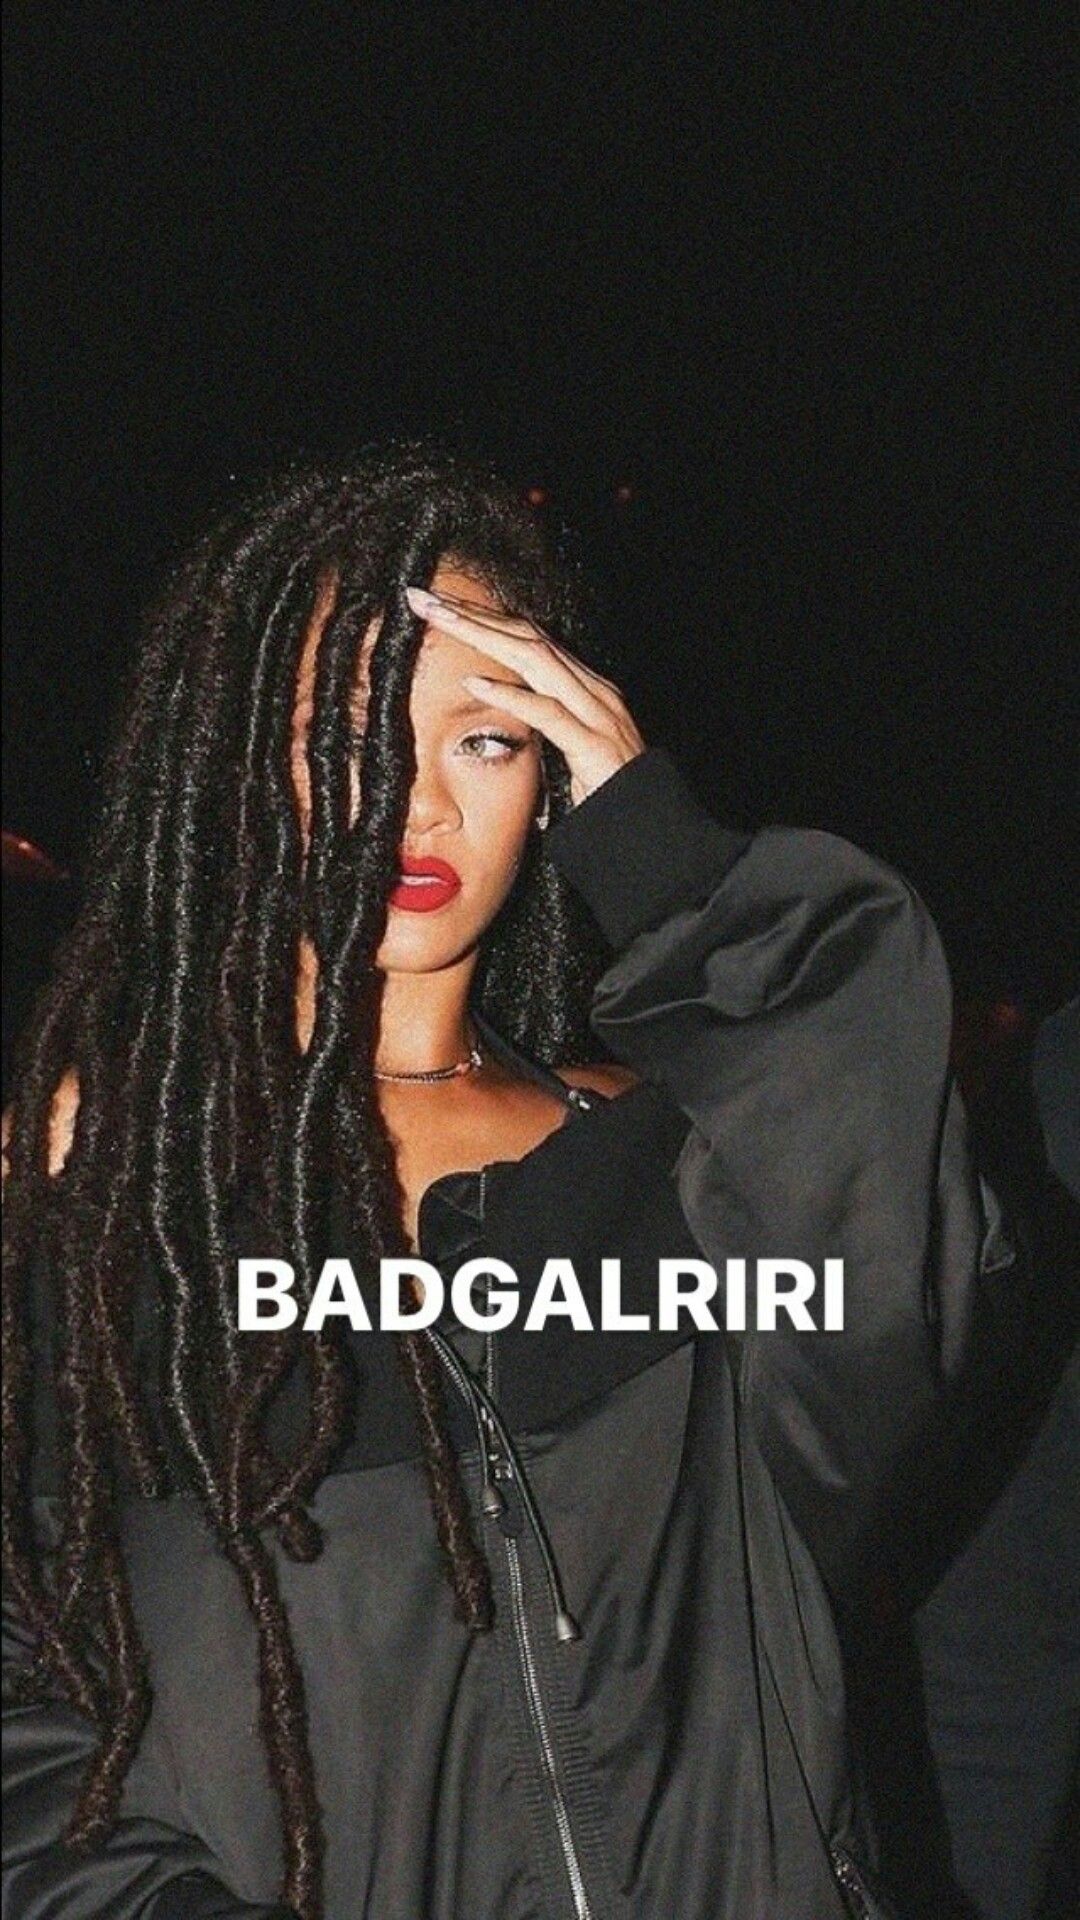 Rihanna Edits. #rihanna #badgalriri #edit. Bad girl aesthetic